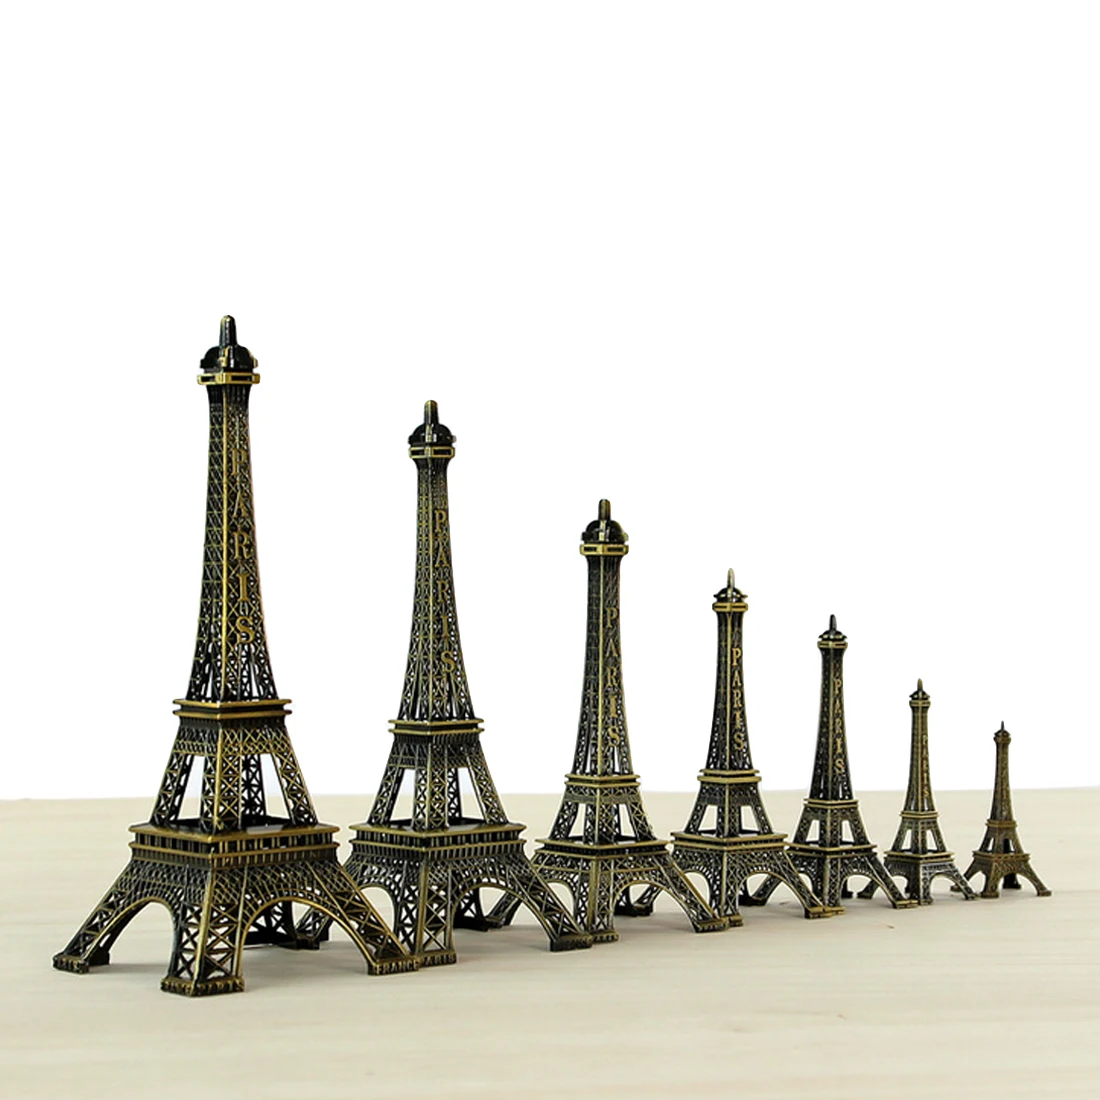 

Good 1Pc Creative Gifts Metal Art Crafts Paris Eiffel Tower Model Figurine Zinc Alloy Statue Travel Souvenirs Home Decorations